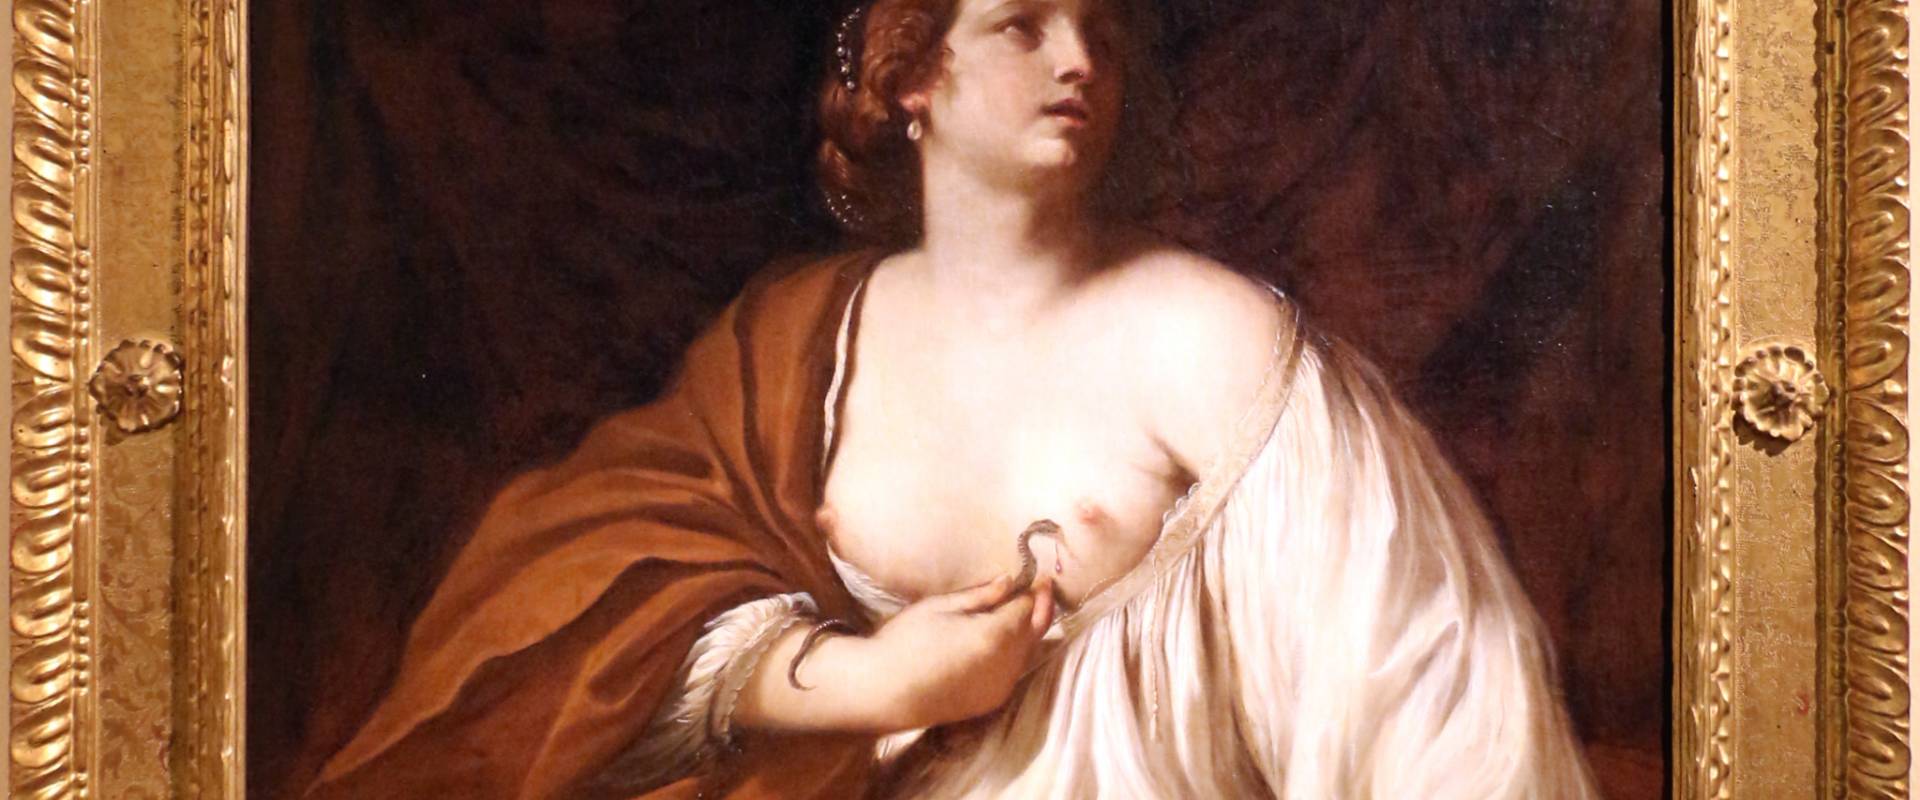 Guercino, cleopatra, 1639 photo by Sailko